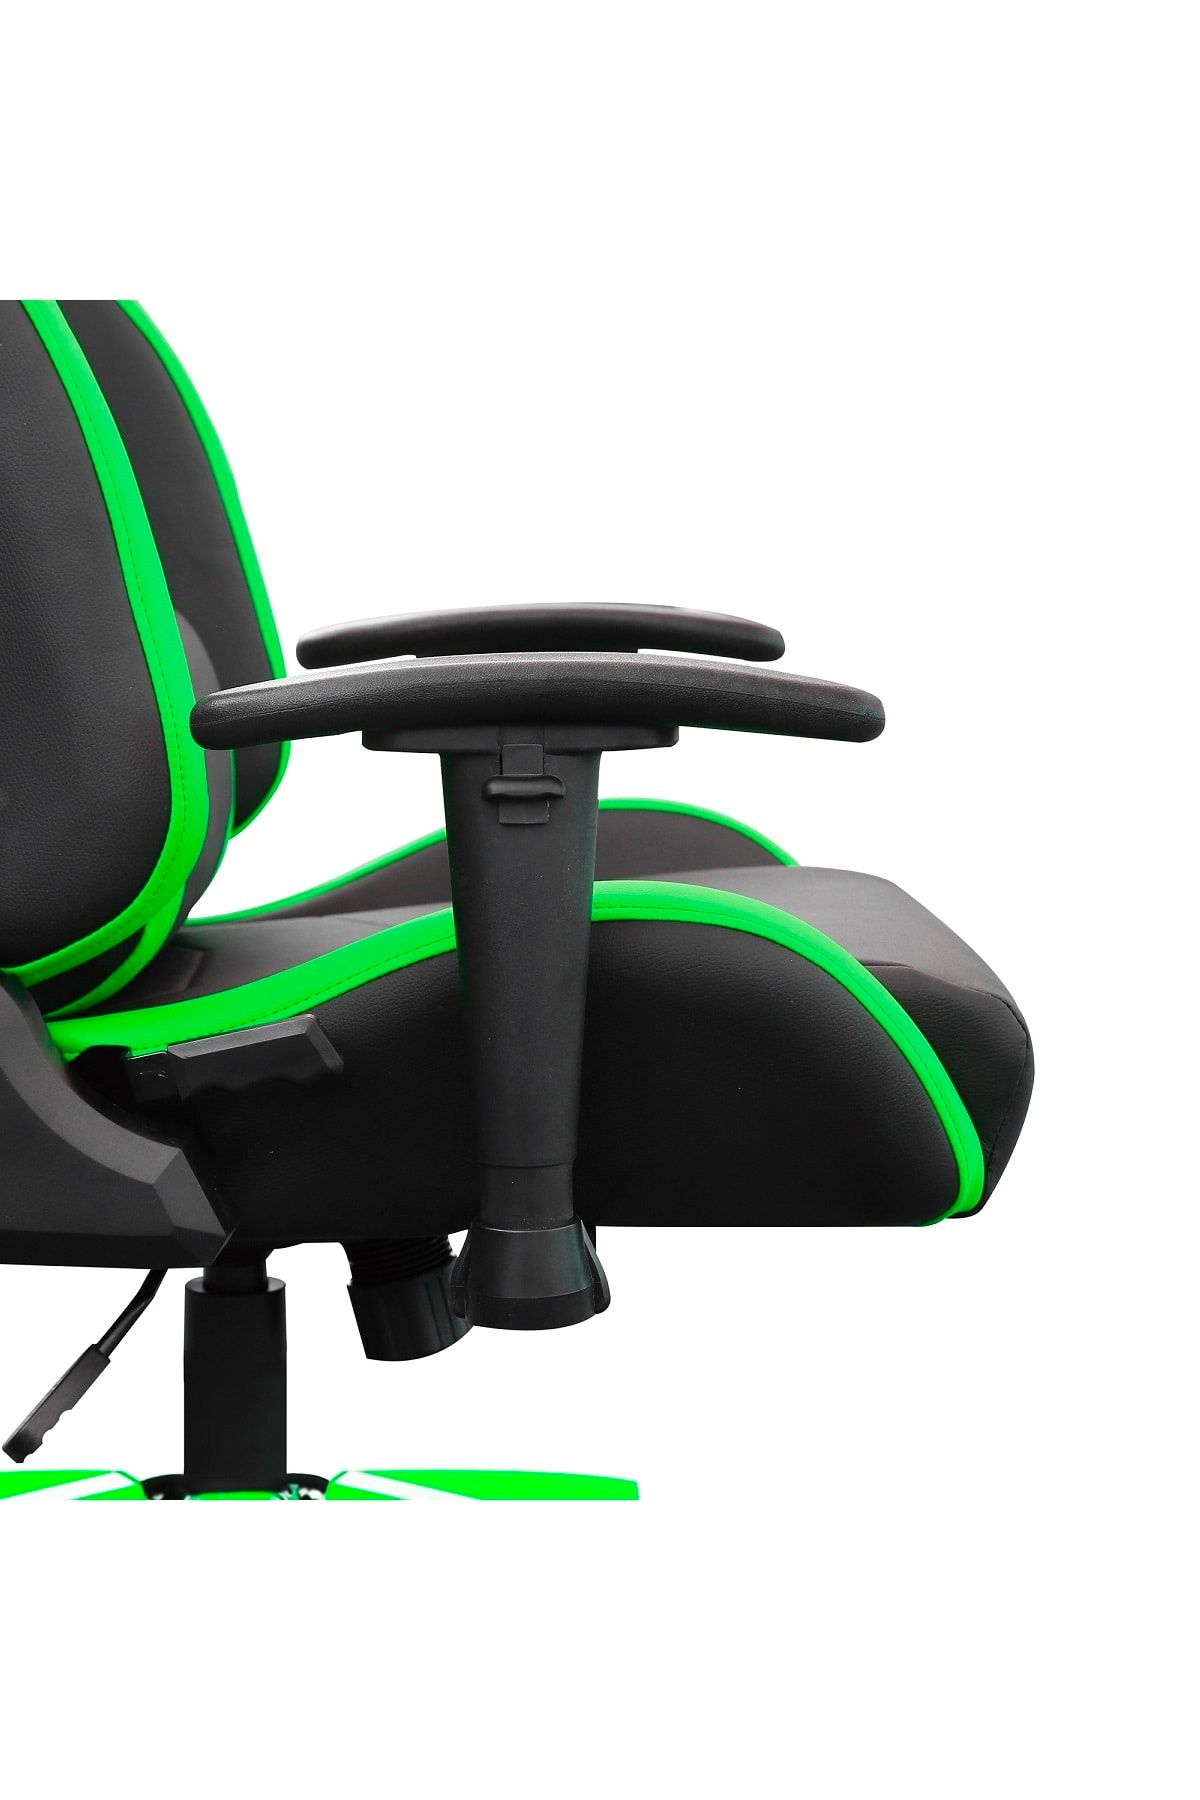 XDrive 15�Li Profesyonel Oyun Oyuncu Koltuğu Yeşil/Siyah Fiyatı